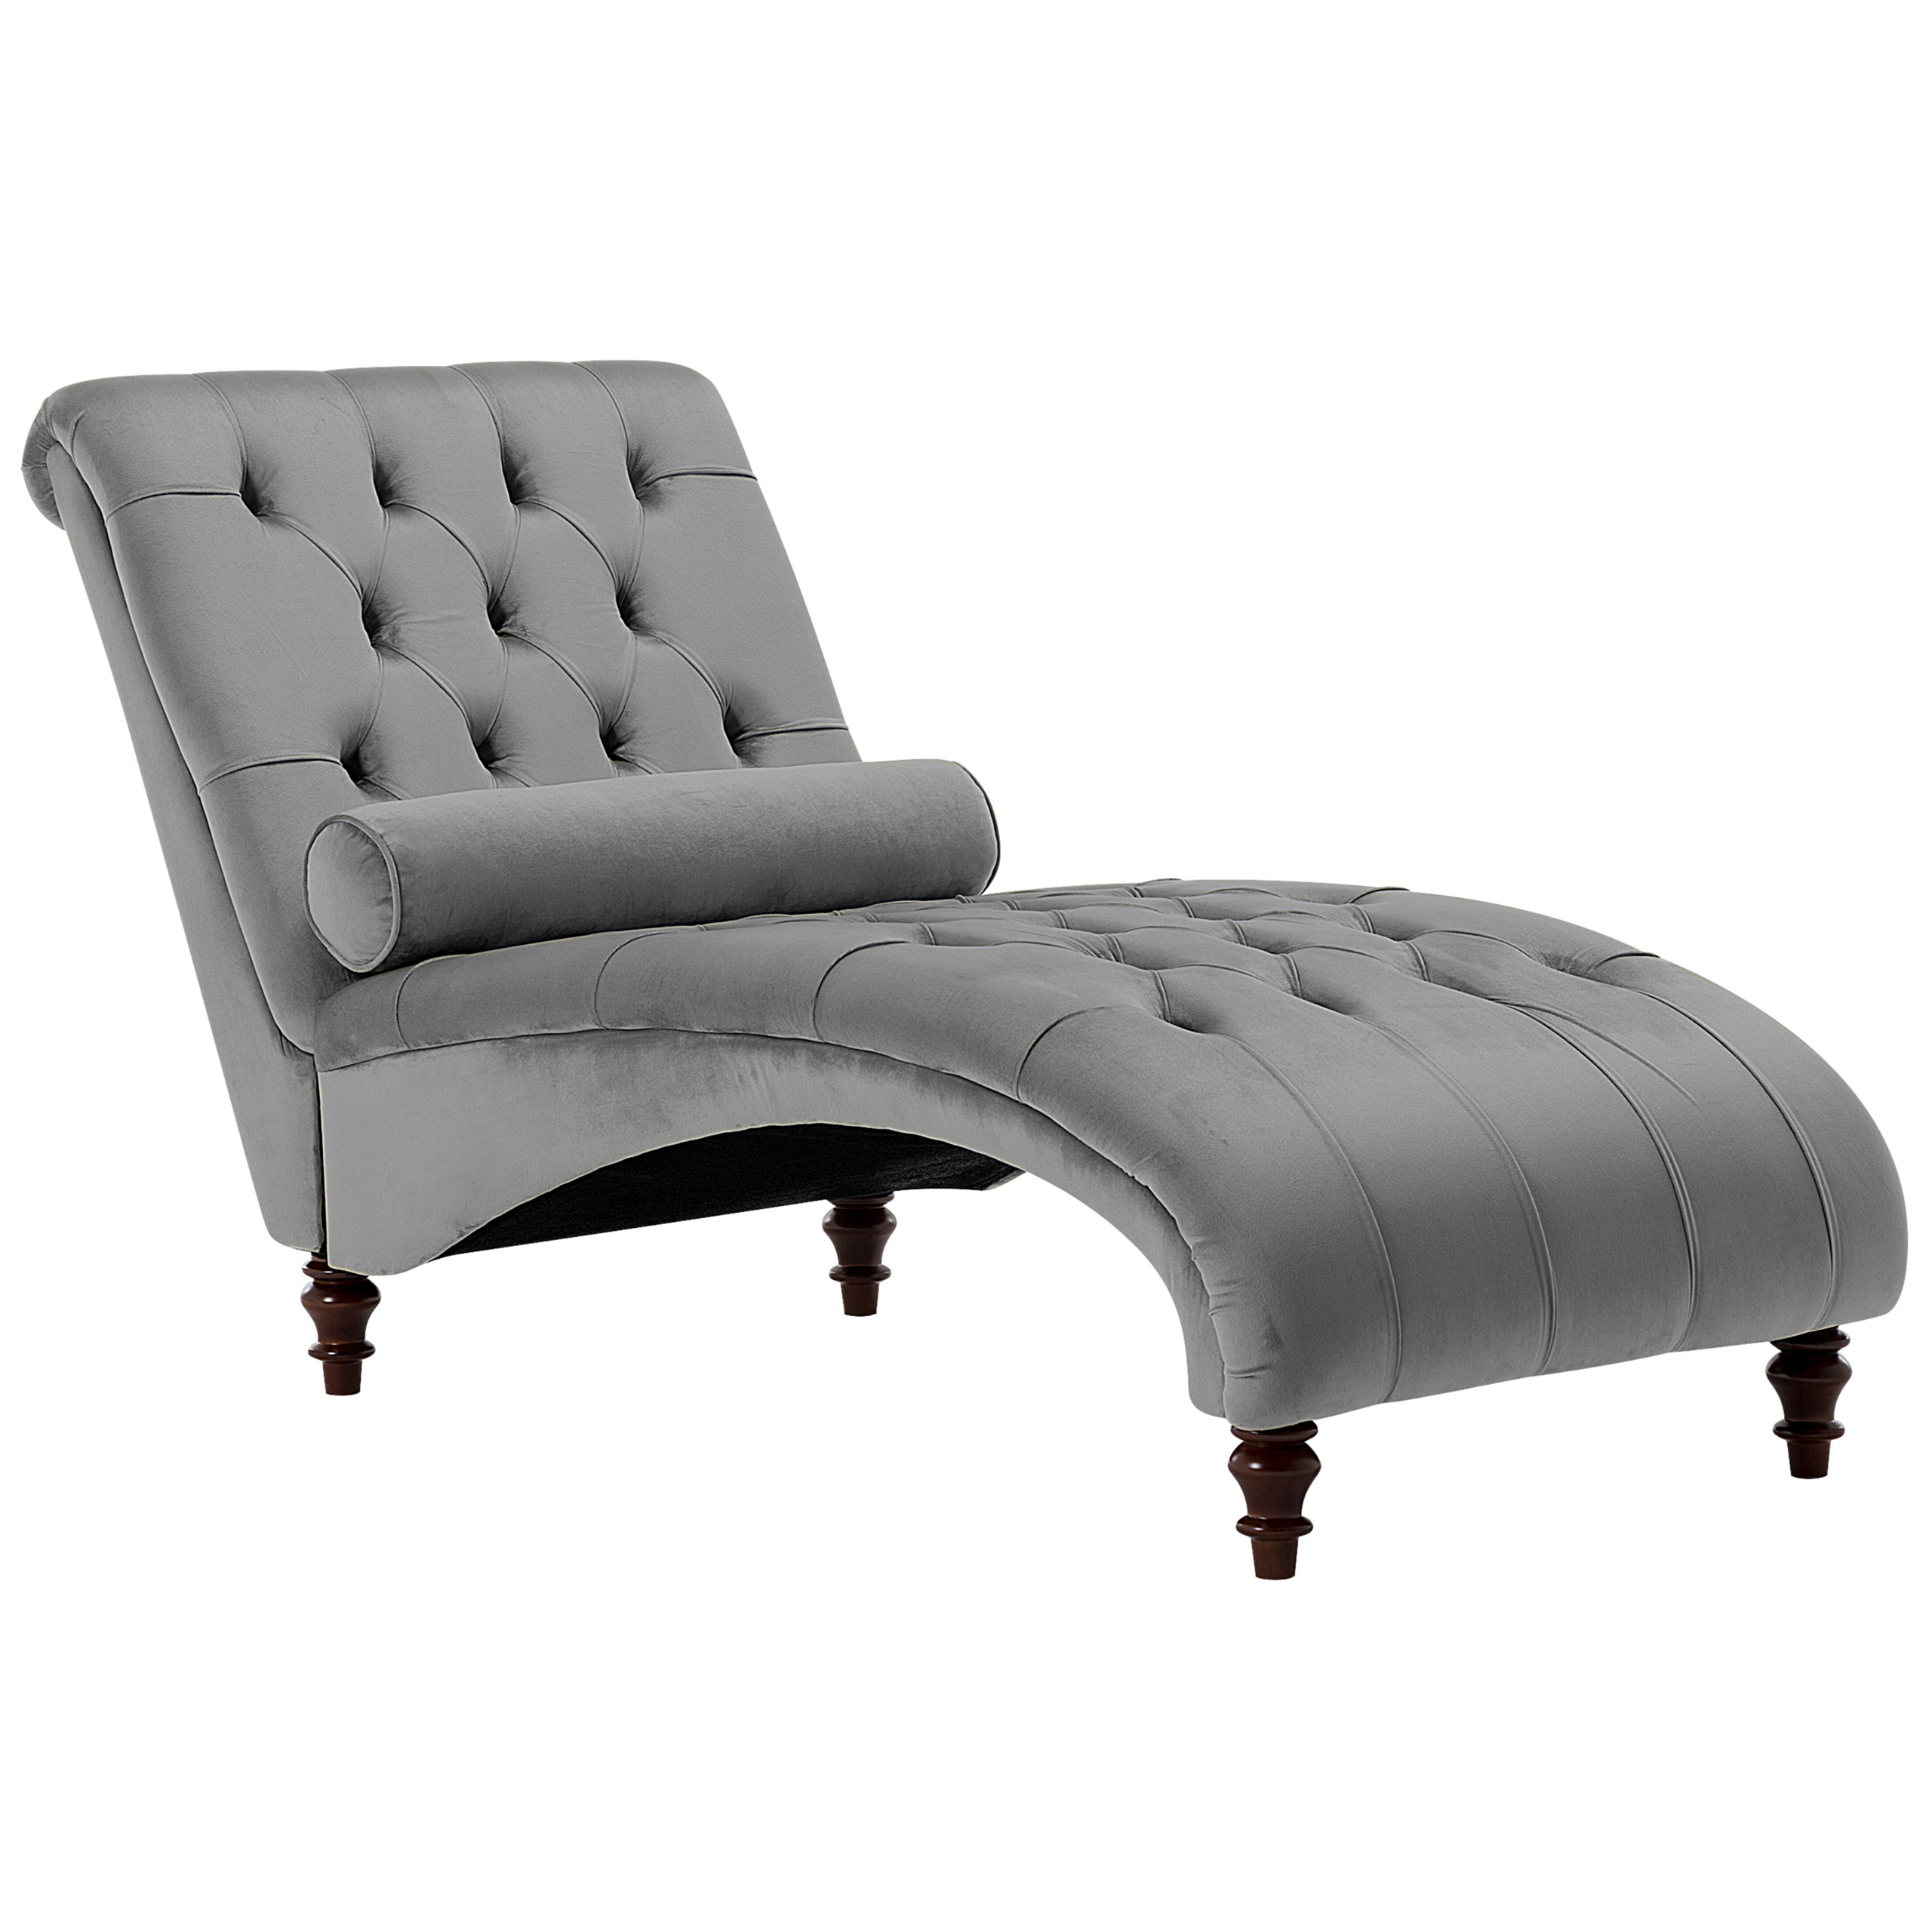 Beliani Chaise Lounge Light Grey Velvet Chesterfield Buttoned Modern Living Room Chaise Wooden Legs